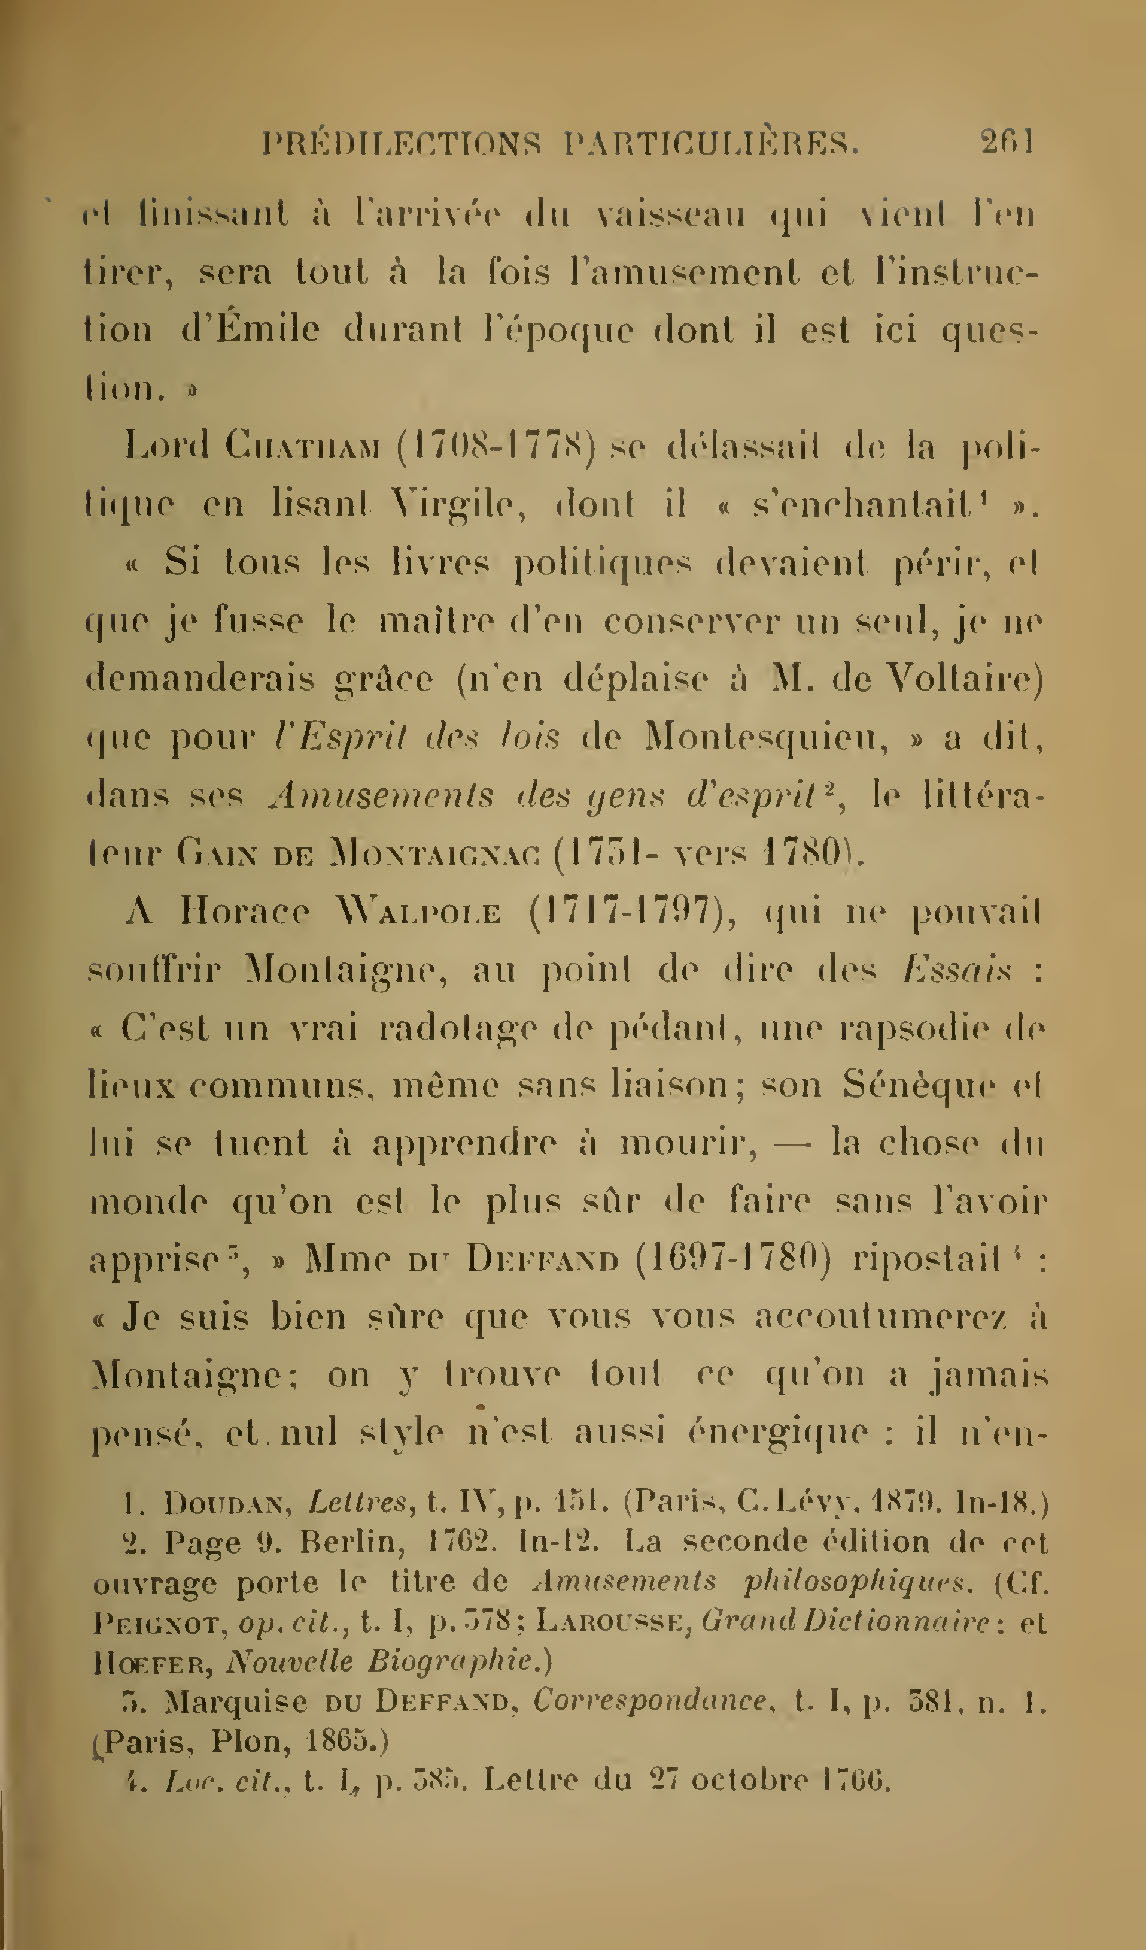 Albert Cim, Le Livre, t. I, p. 261.